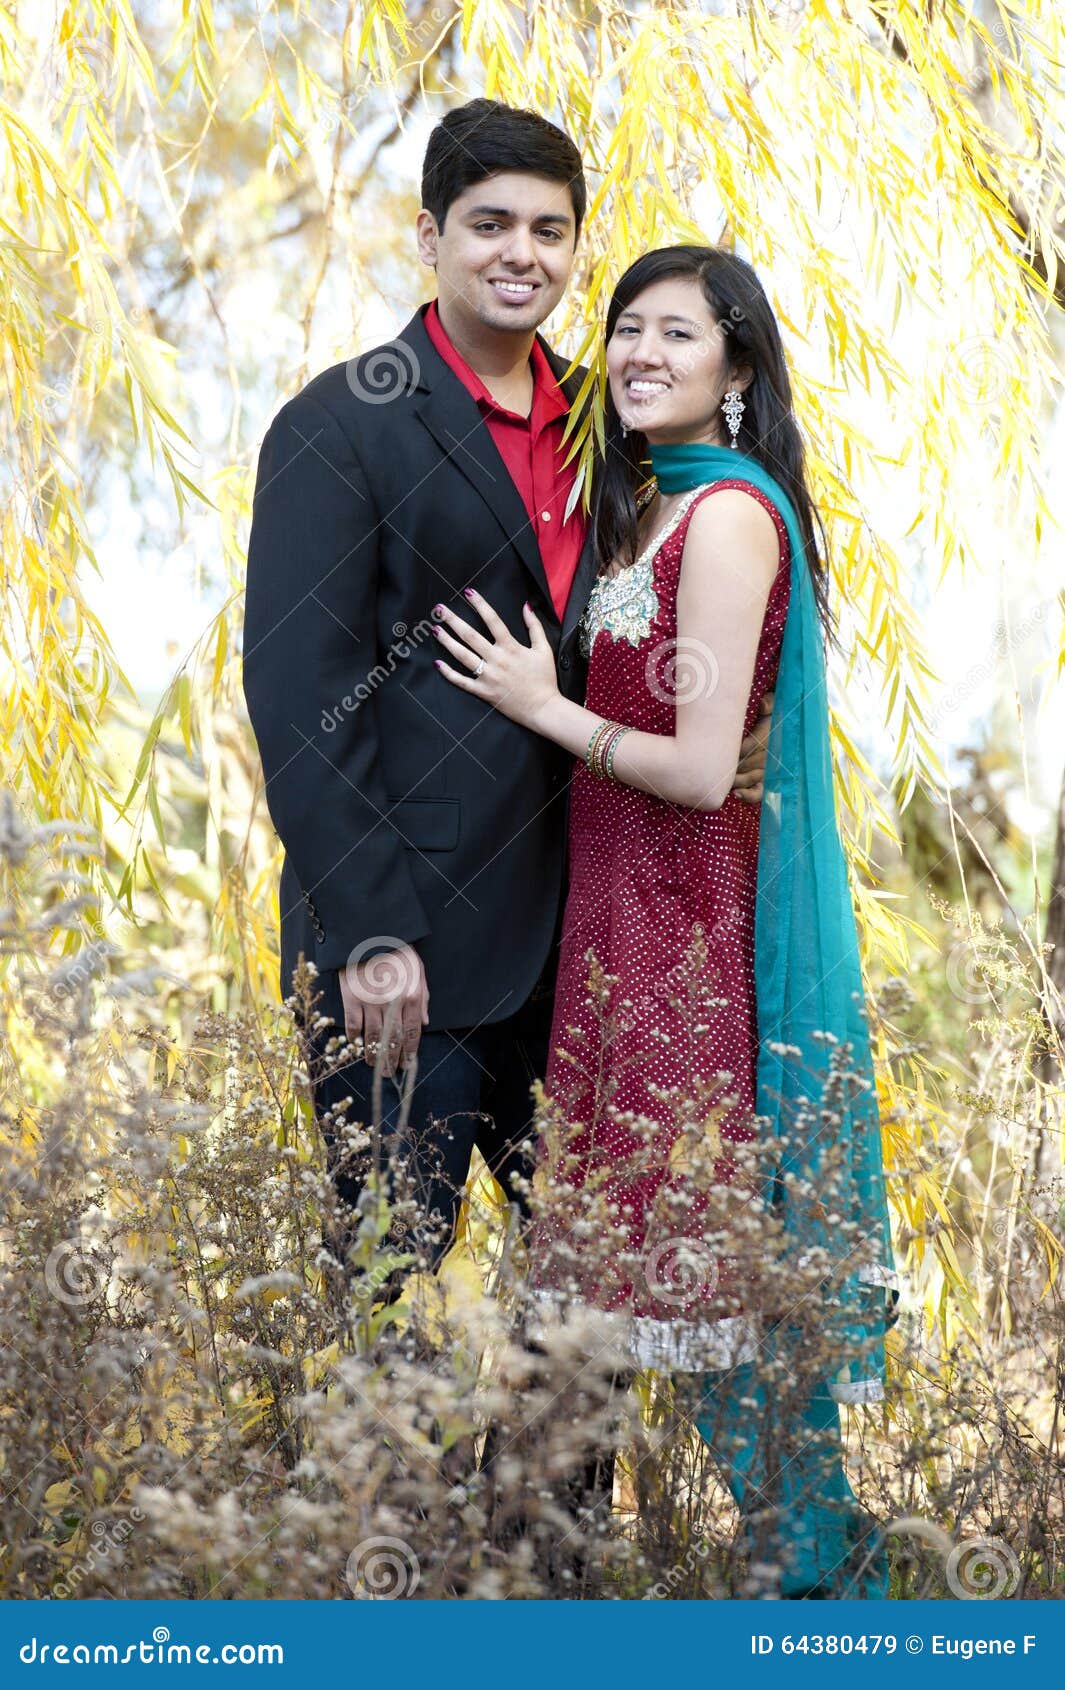 Pin by Aswathy Varghese on Saree wedding | Wedding couple poses  photography, Wedding couple poses, Marriage photoshoot